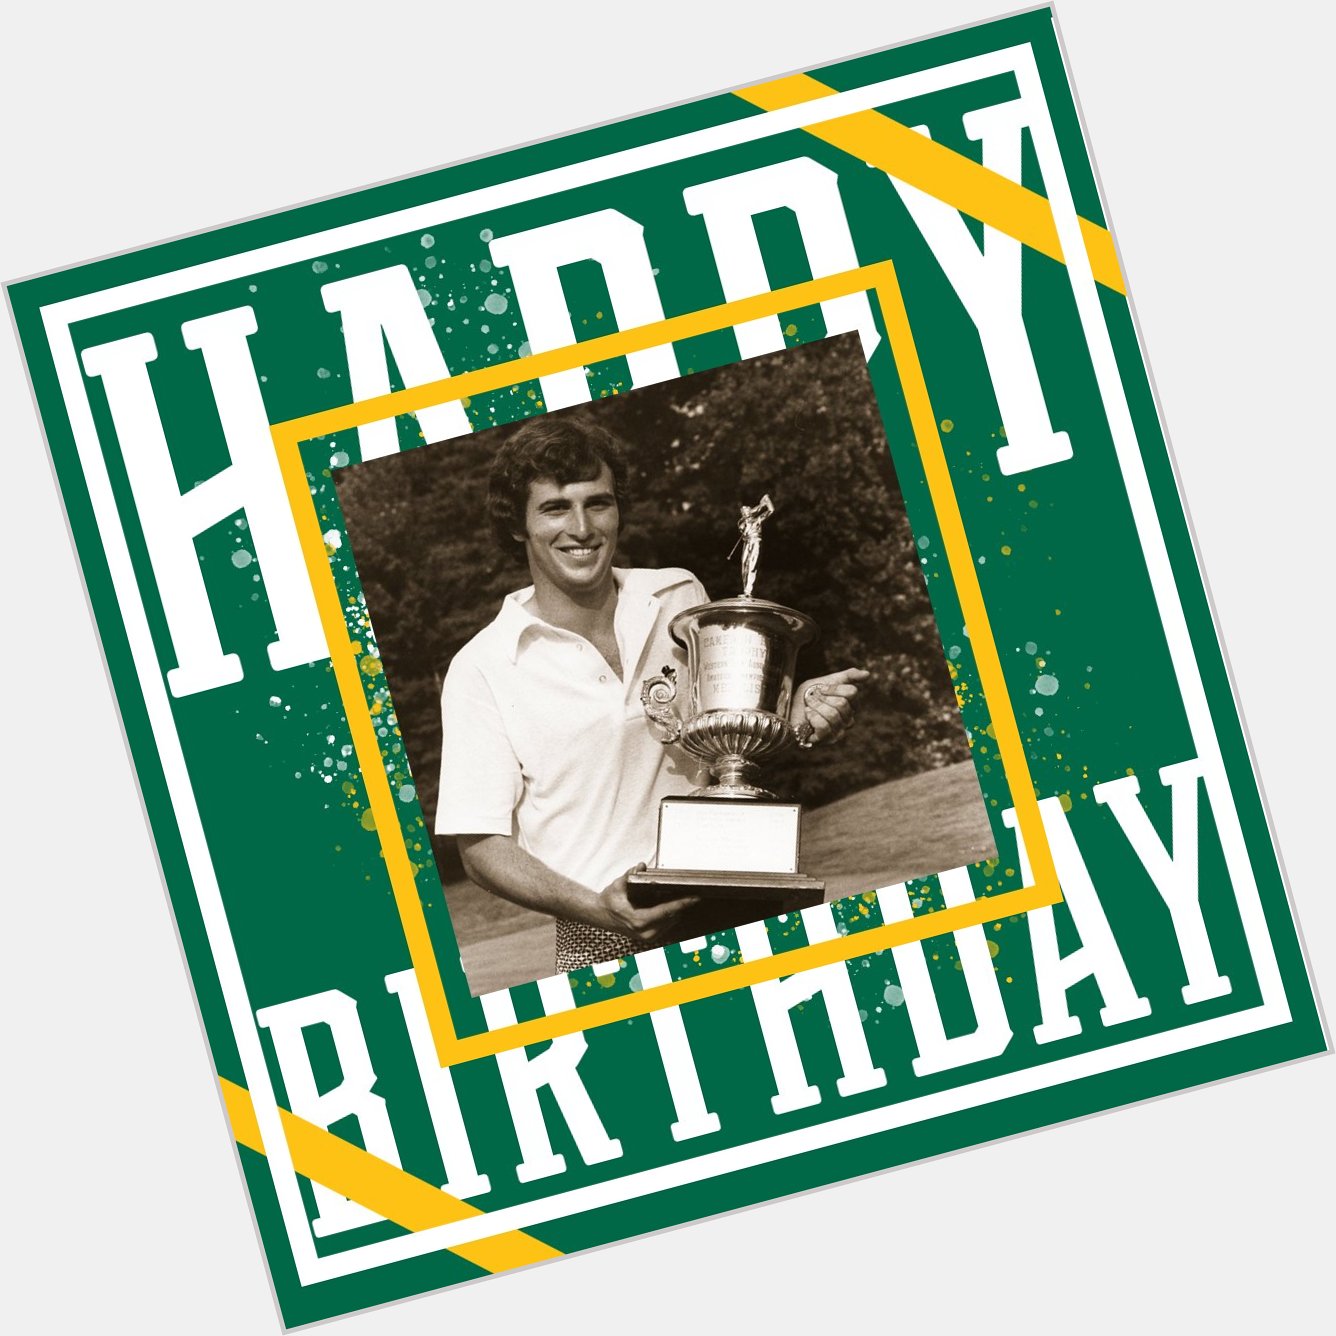 Happy birthday to 1974 champion Curtis Strange! 